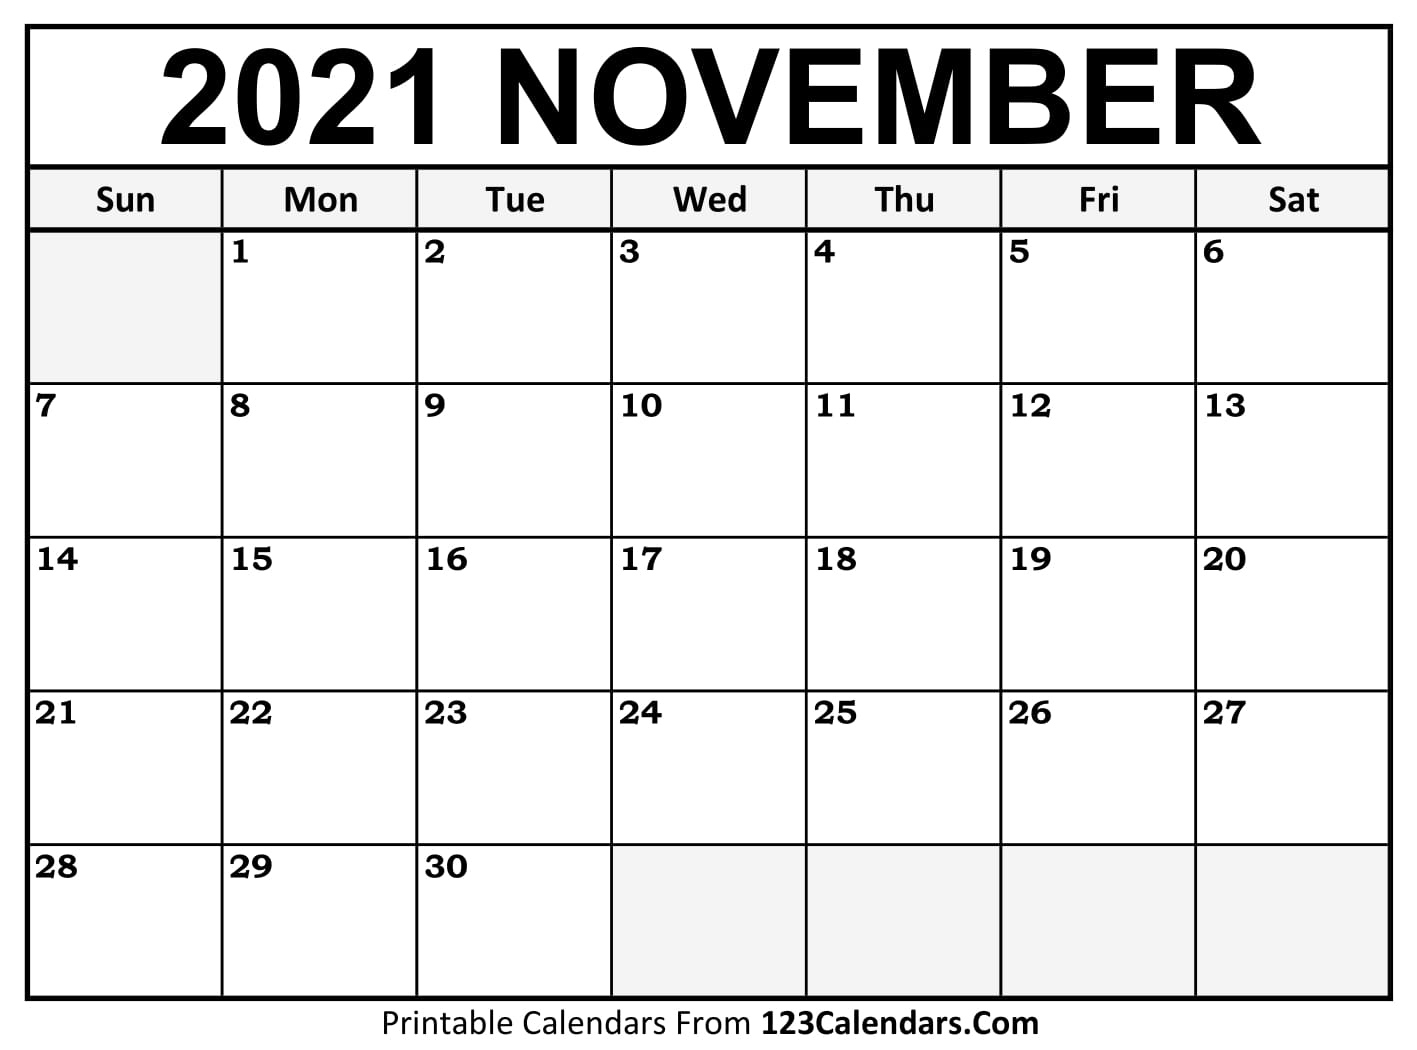 Printable November 2021 Calendar Templates - 123Calendars November To January 2021 Calendar